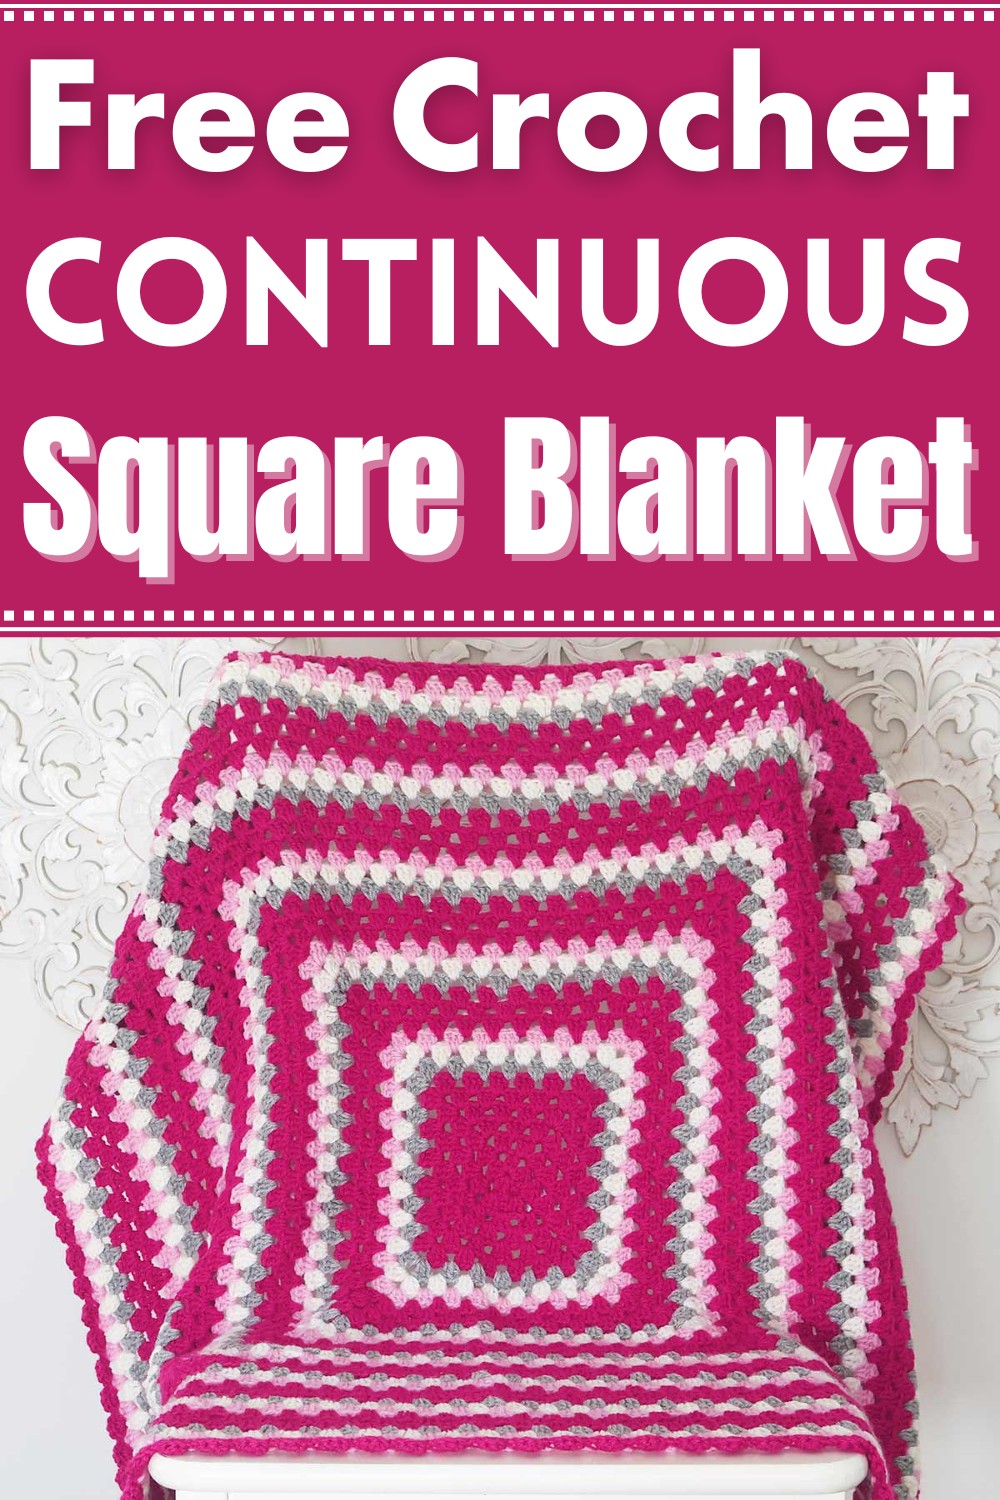 Continuous Square Blanket